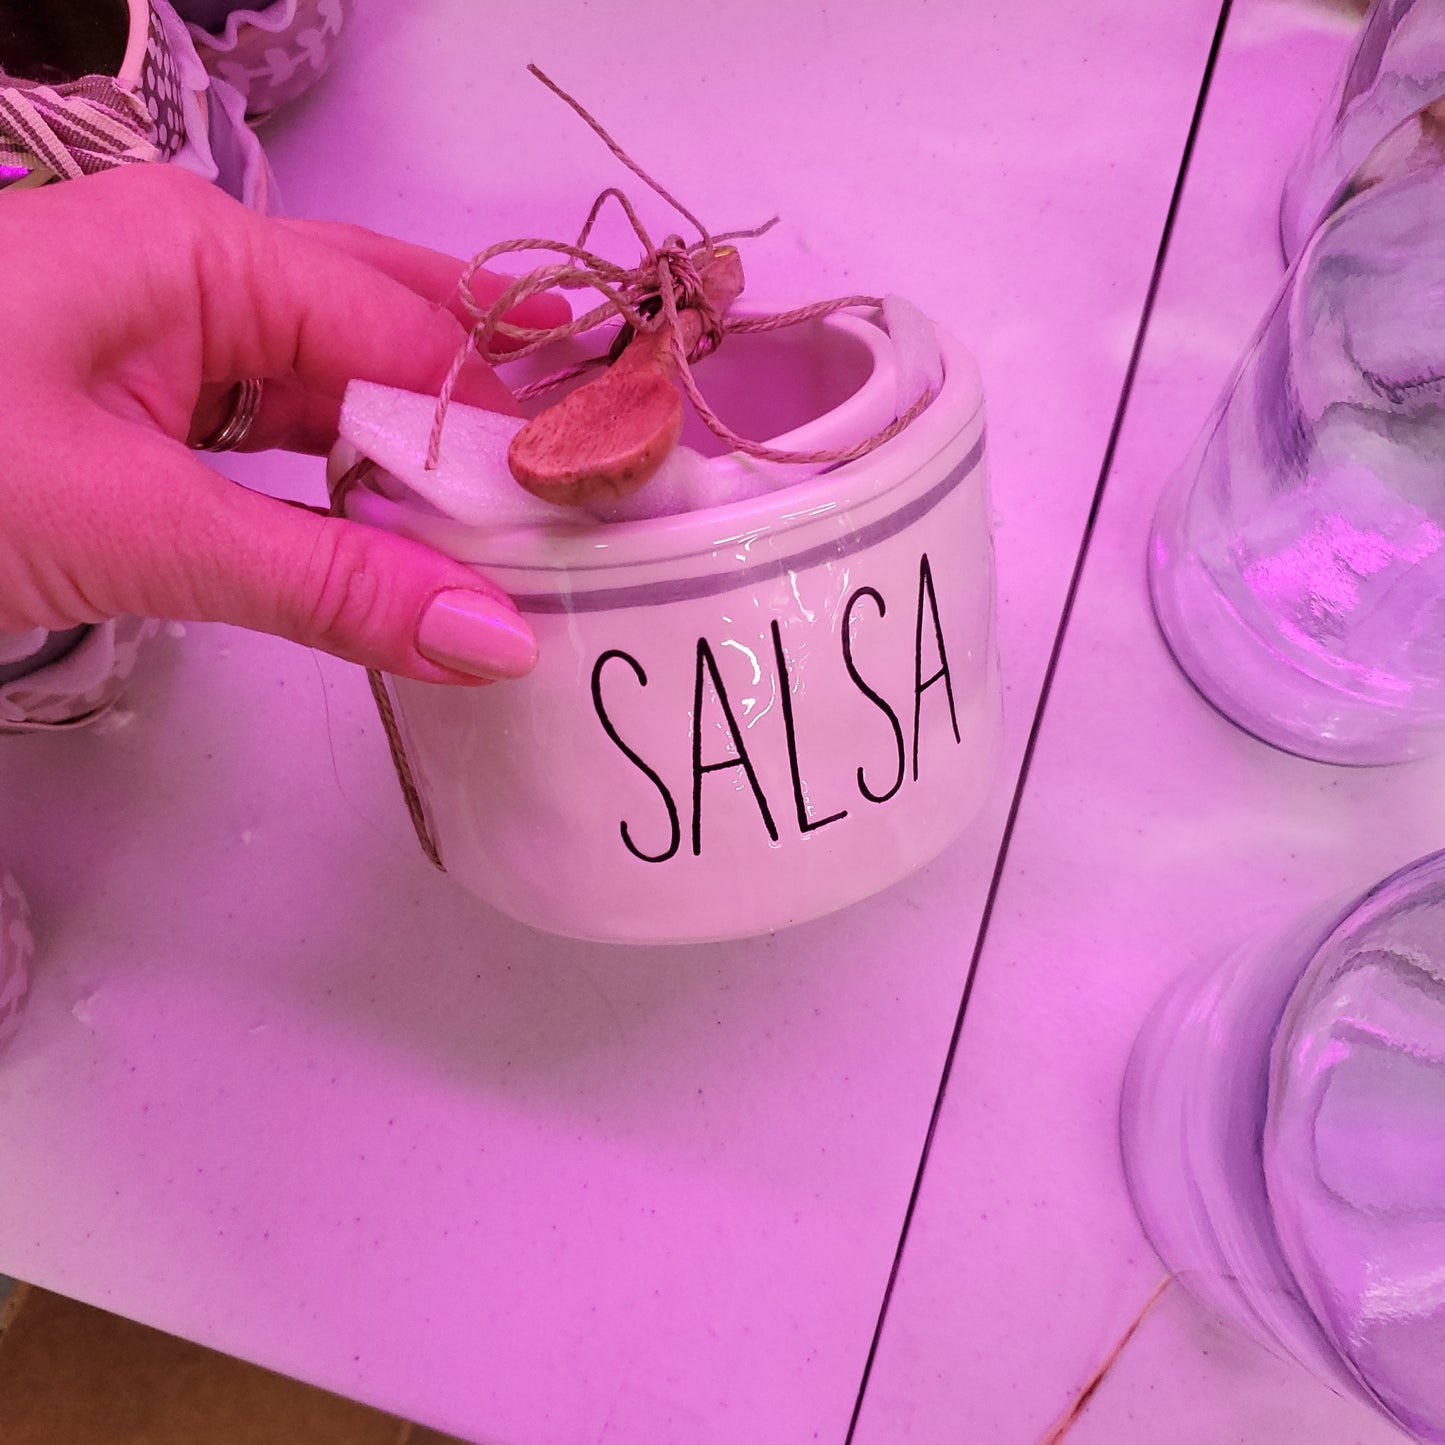 Gauc & salsa